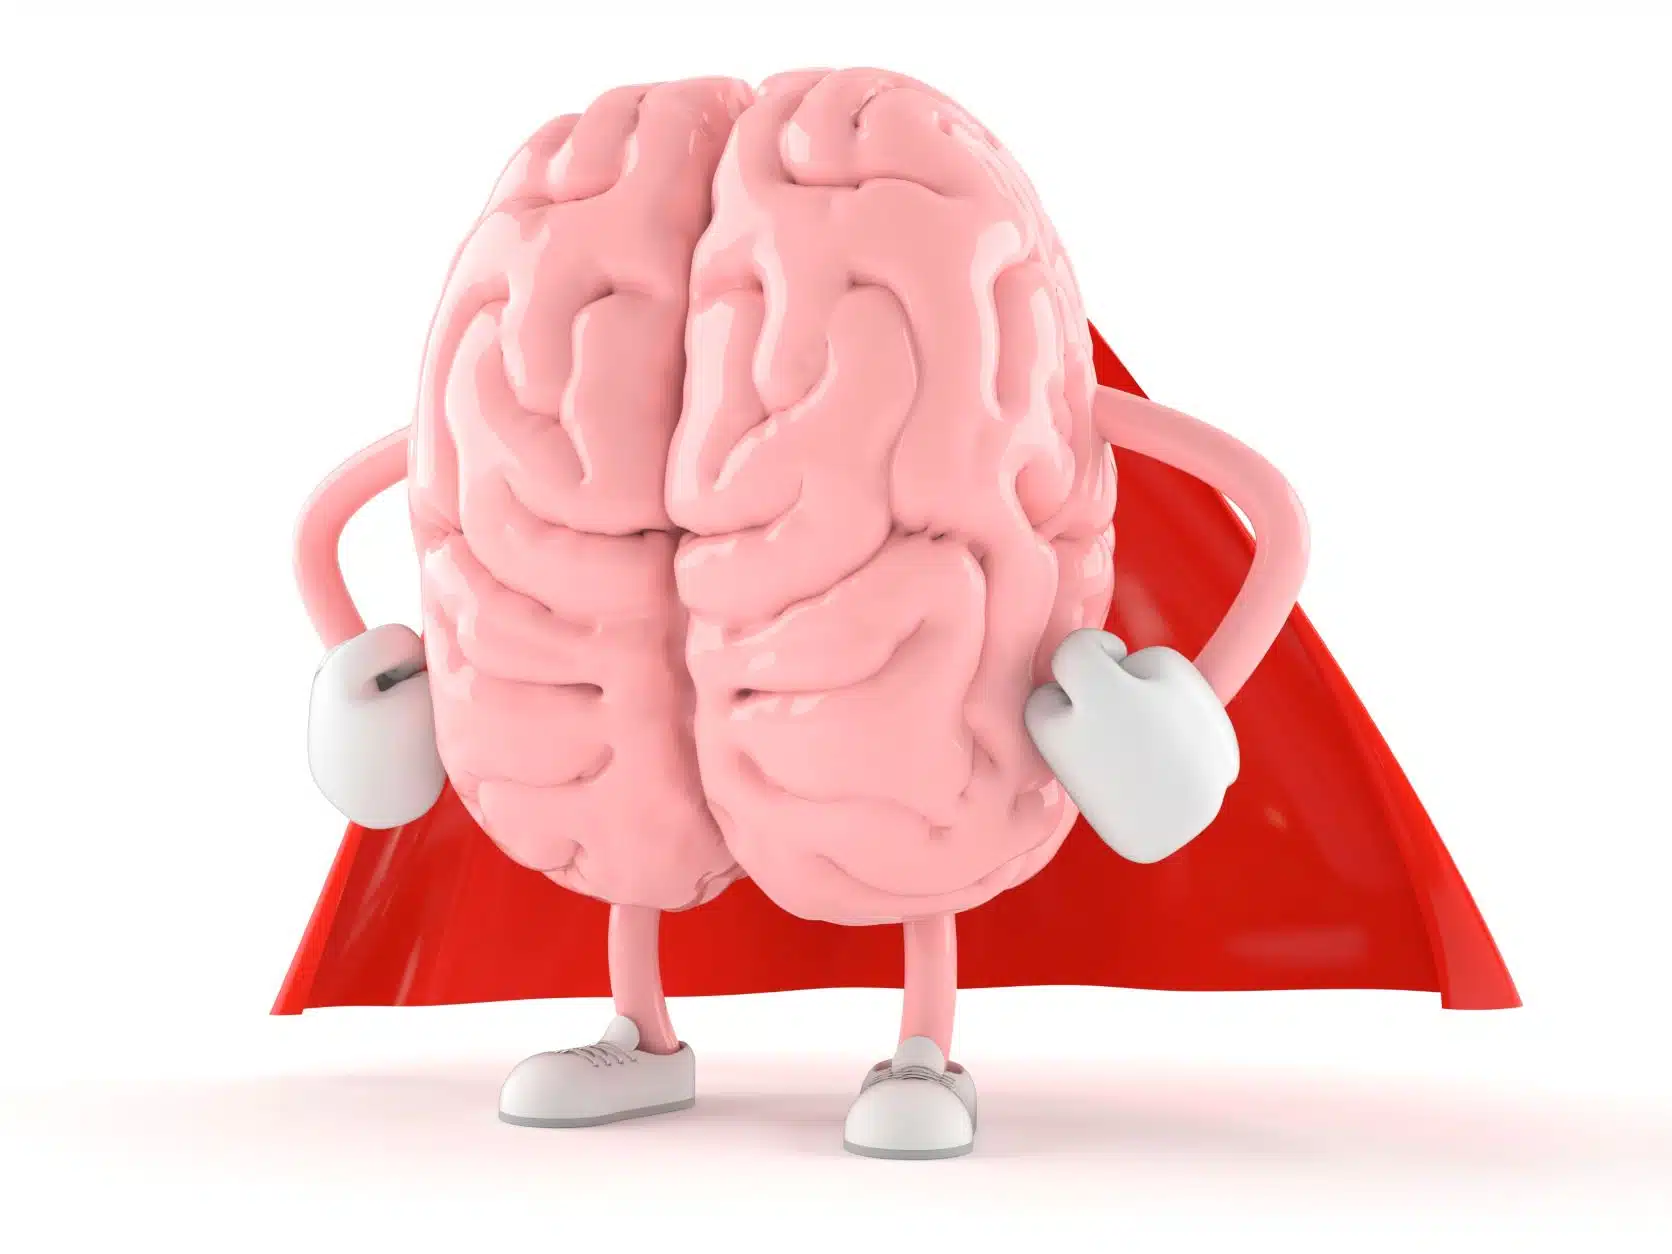 functional neurology improves brain strength